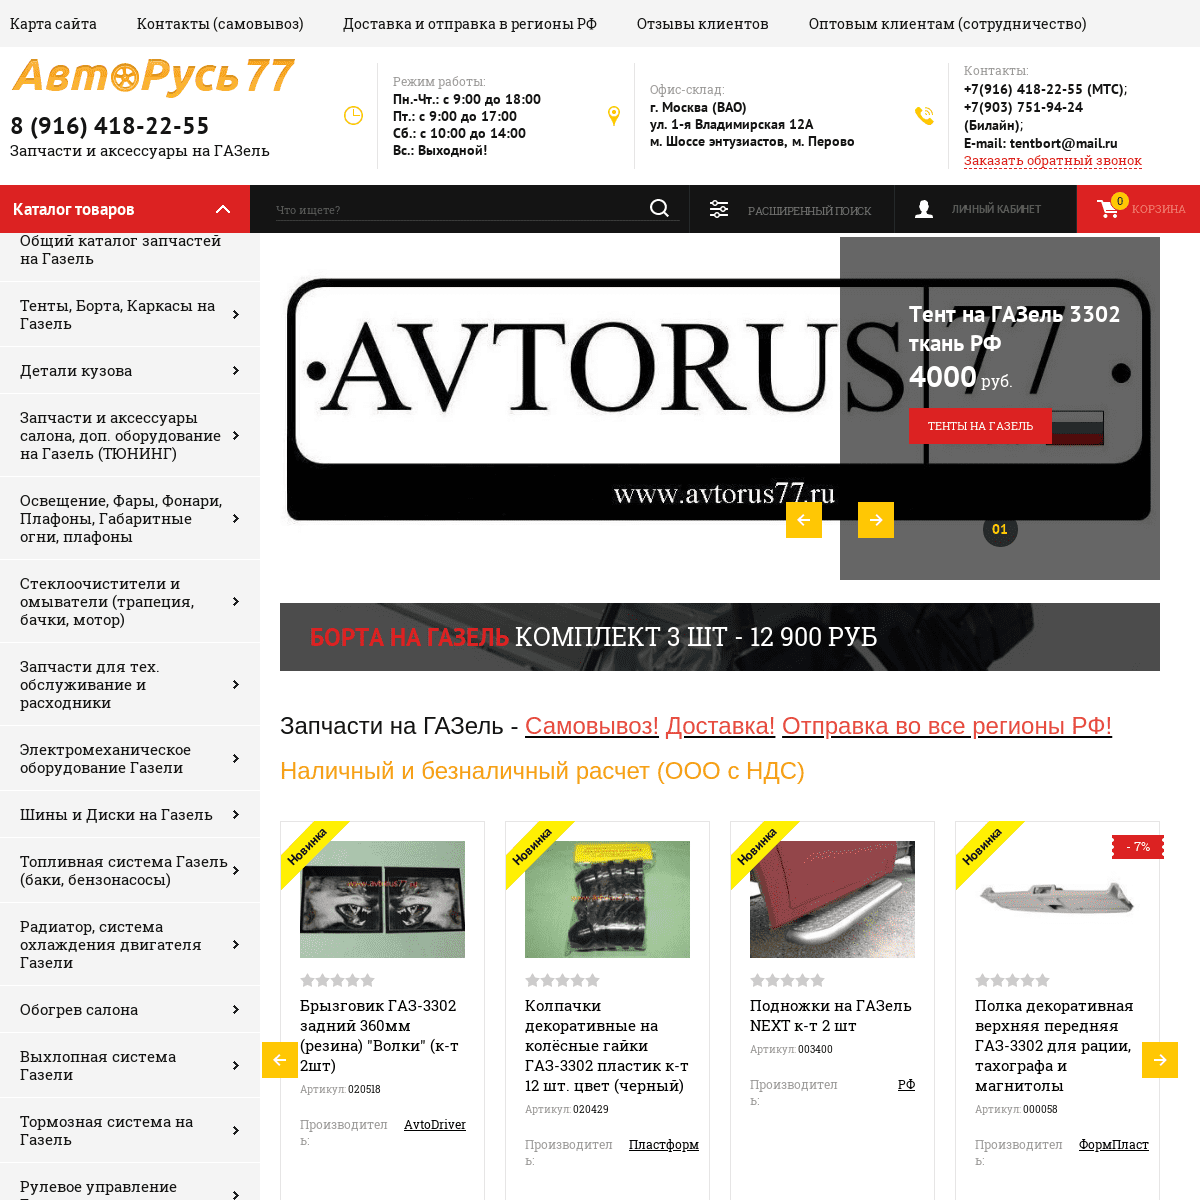 A complete backup of avtorus77.ru